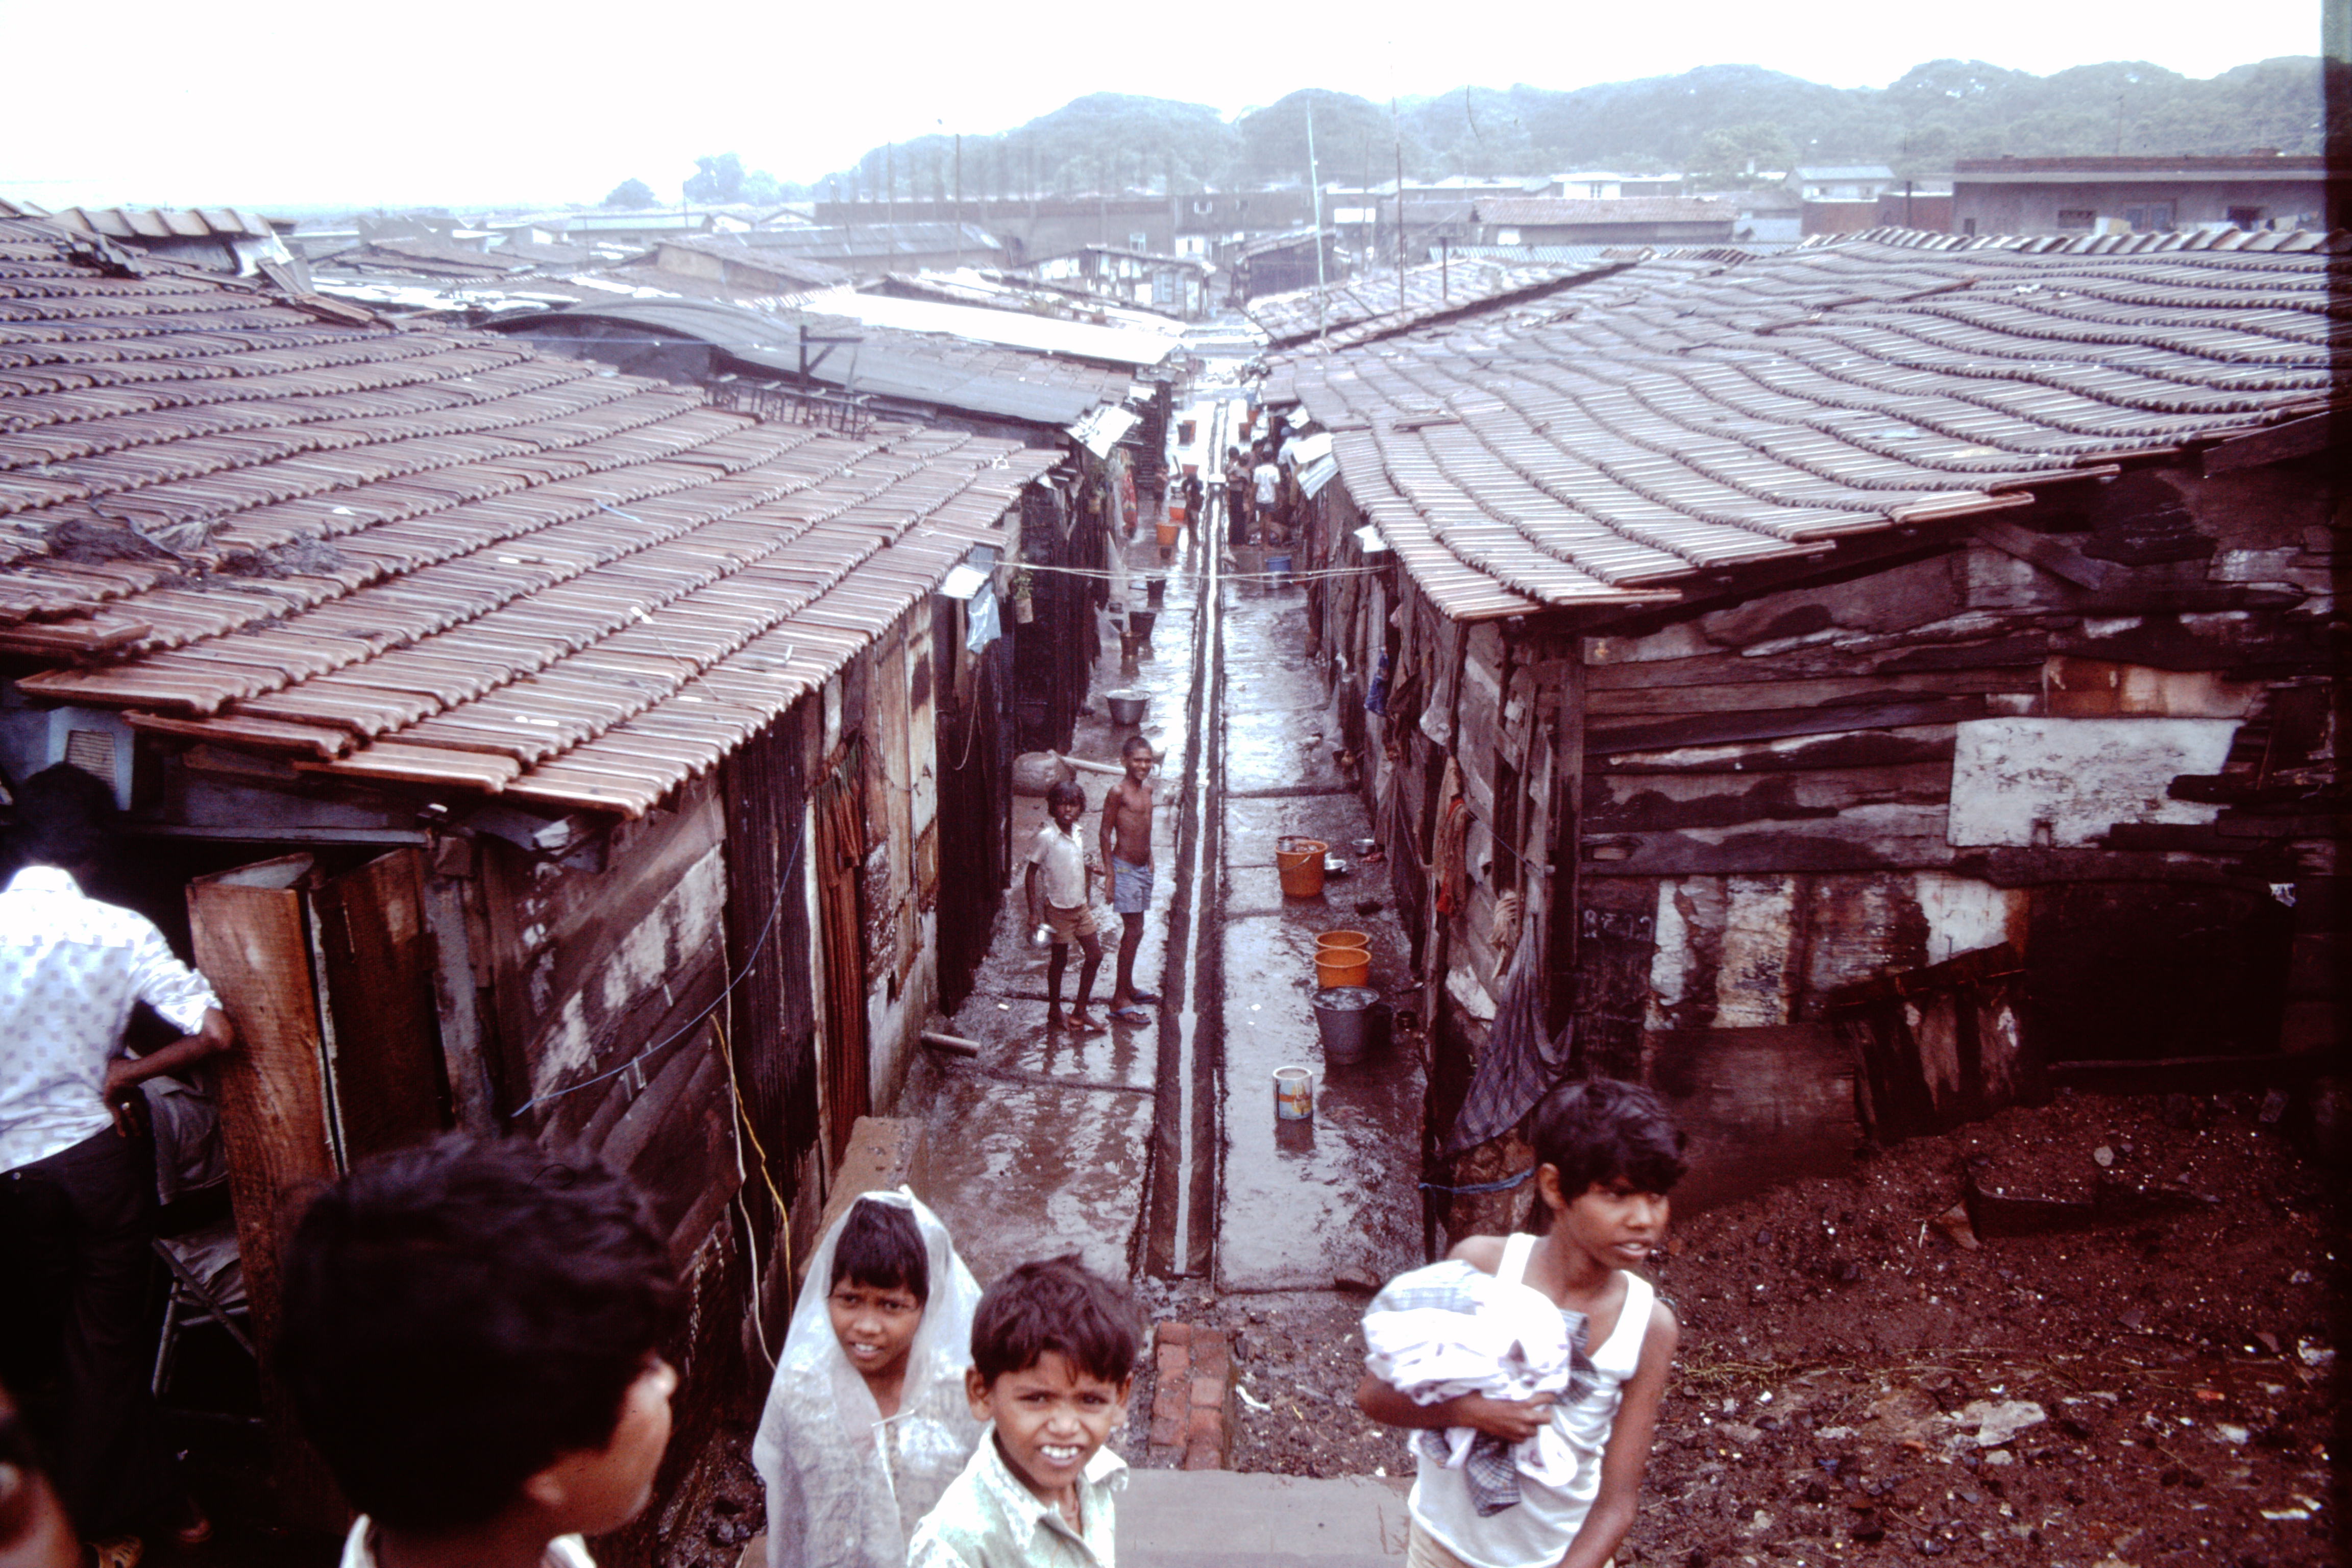 Slums-of-Mumbai-1979-gutter-roofs-IHS-87-05.jpeg